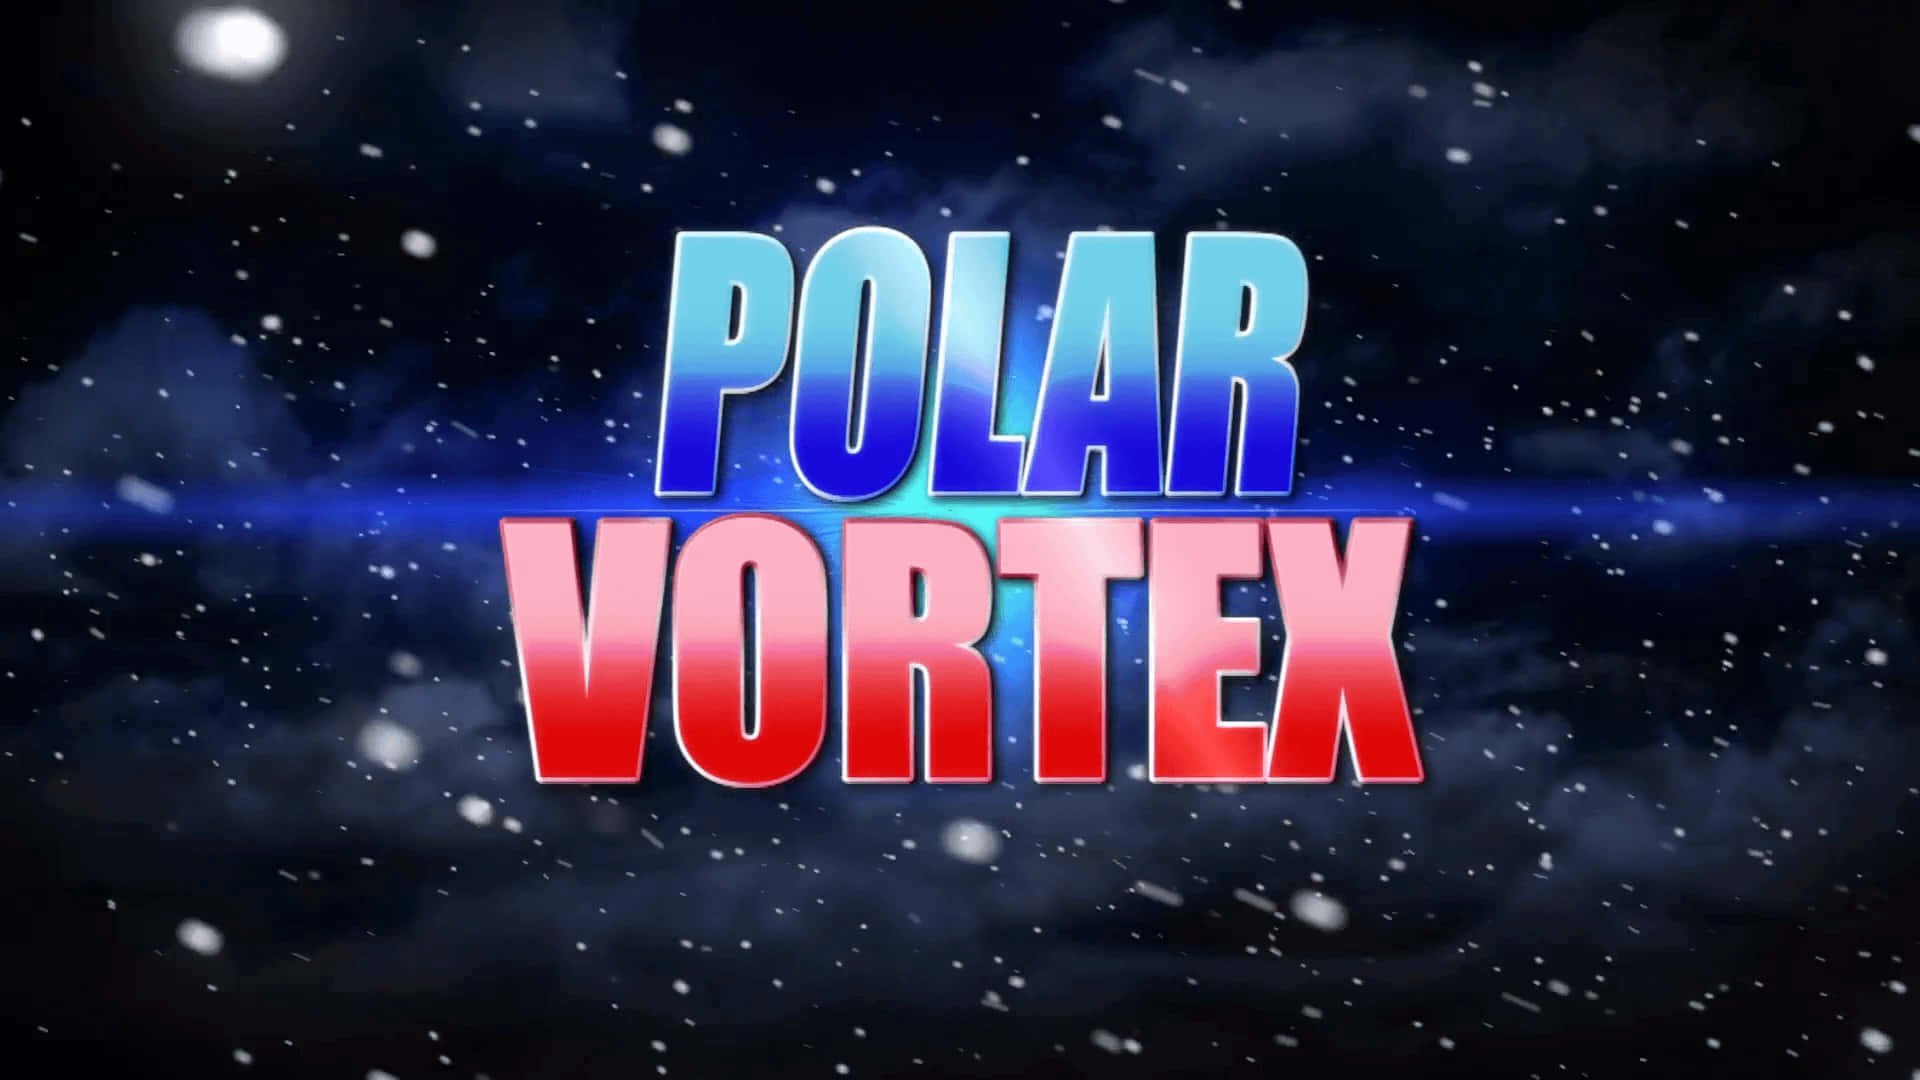 Stunning Polar Vortex Phenomenon in the Sky Wallpaper